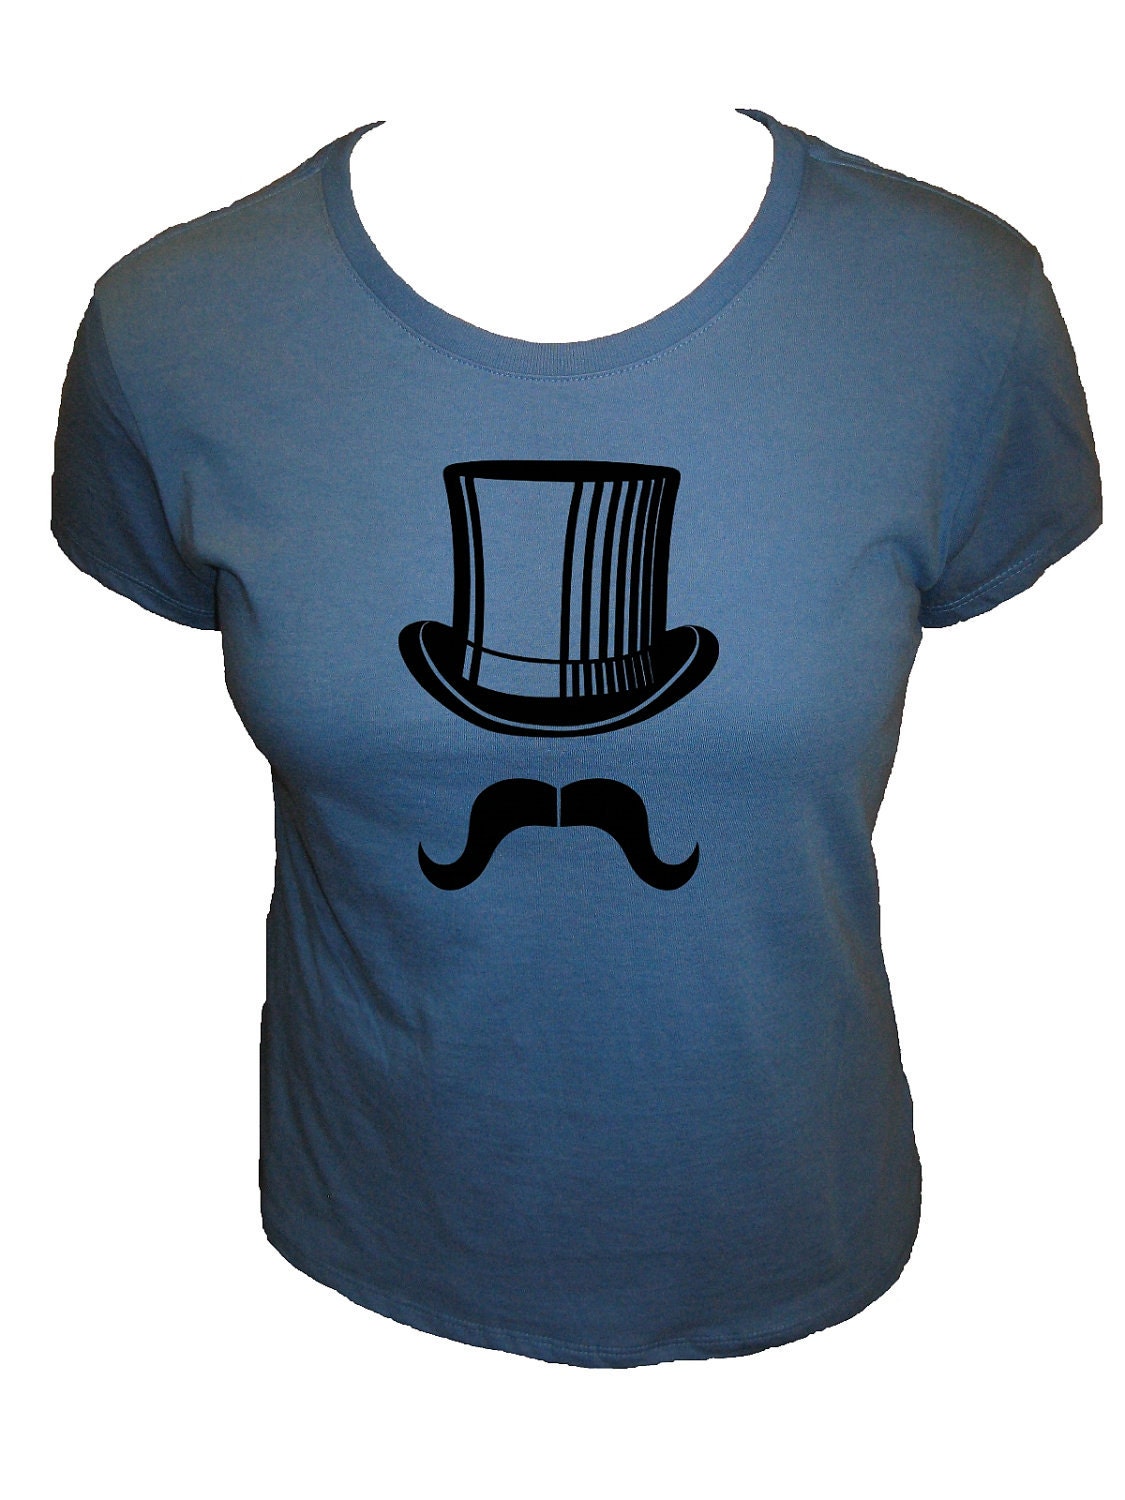 Mustache Shirt / Moustache Shirt Mr by SunshineMountainTees